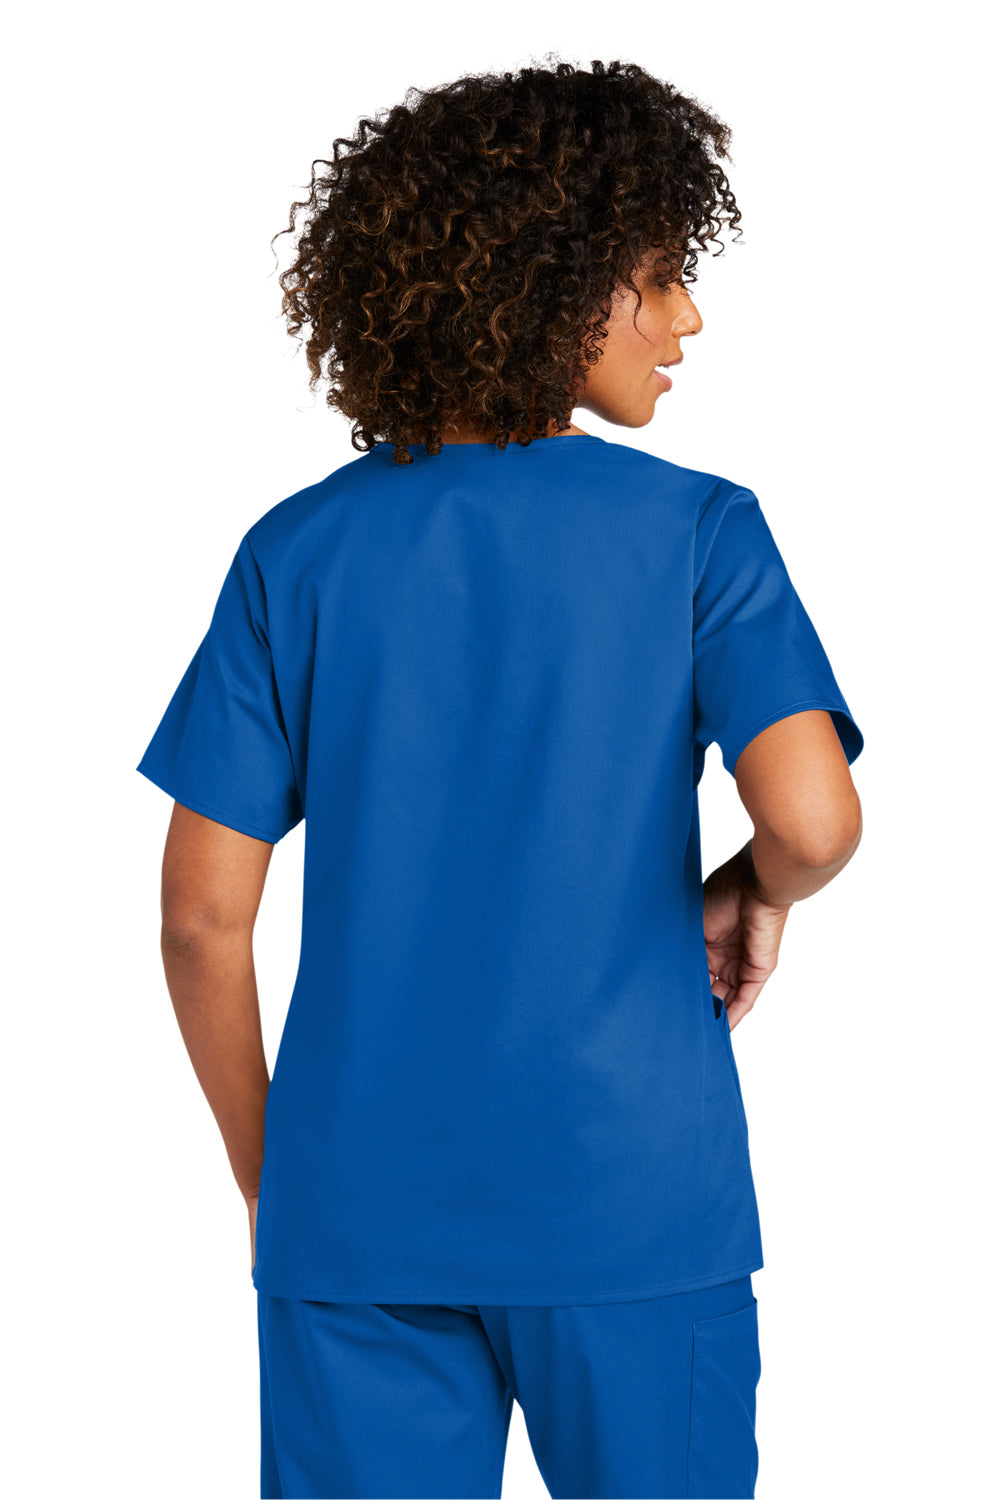 Wonderwink WW4760 WorkFlex Short Sleeve V-Neck Mock Wrap Shirt Royal Blue Back